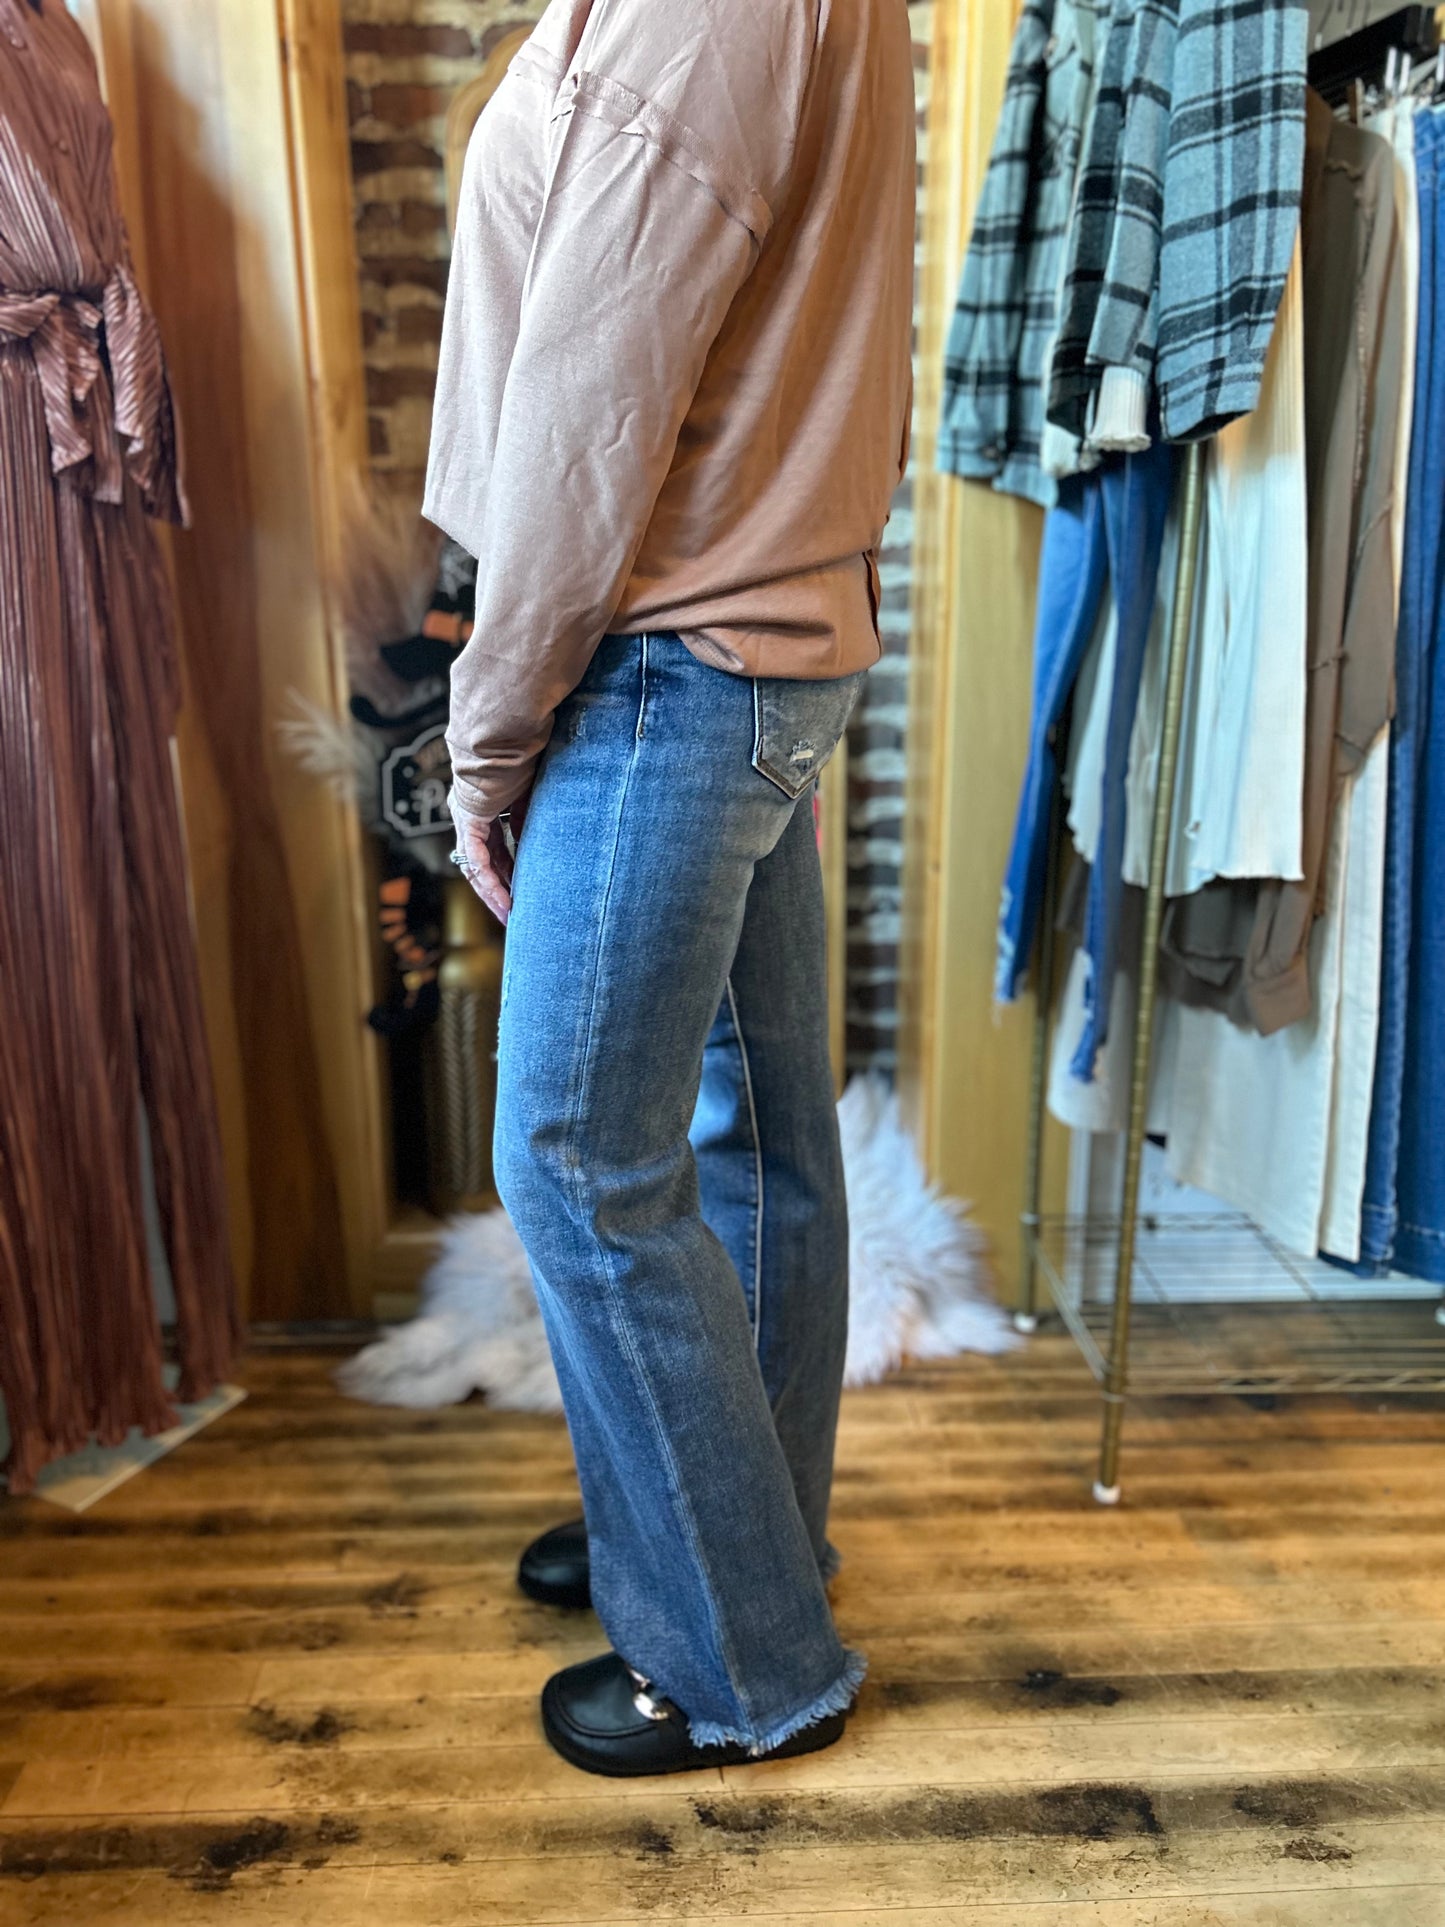 Risen Mid Rise Long Straight Jeans